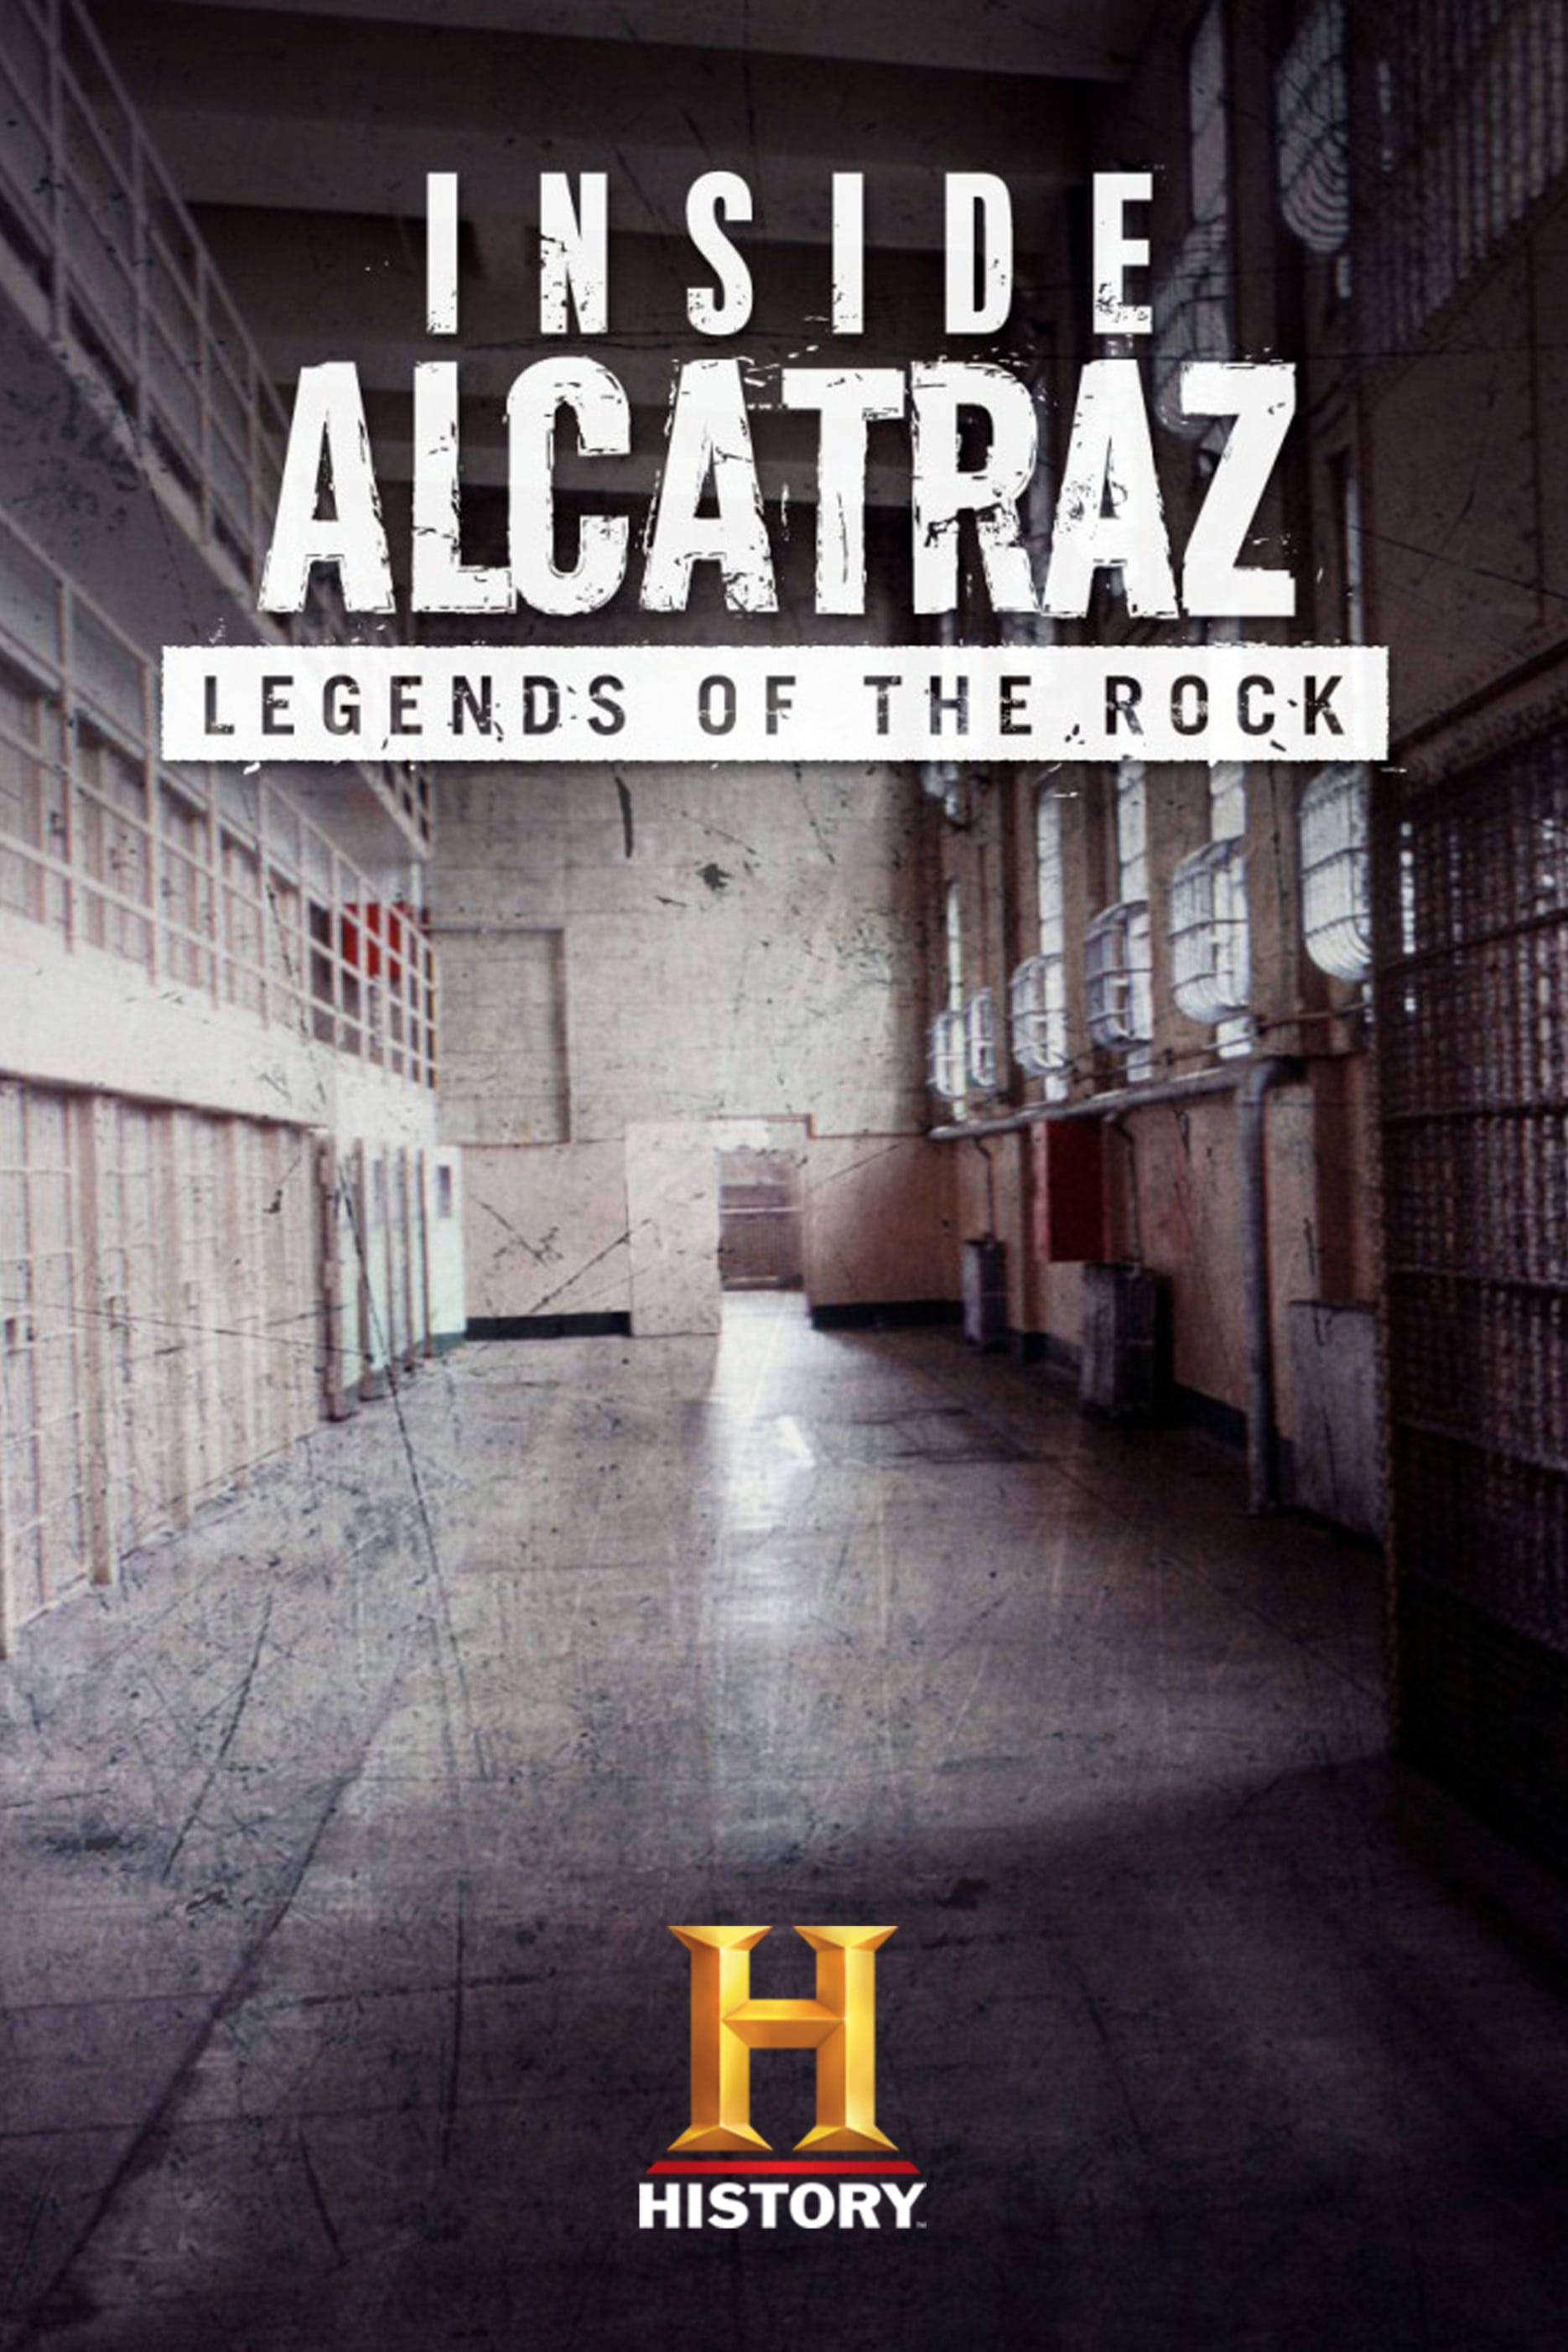 Caratula de INSIDE ALCATRAZ, LEGENDS OF THE ROCK (Alcatraz, leyendas de la Roca) 